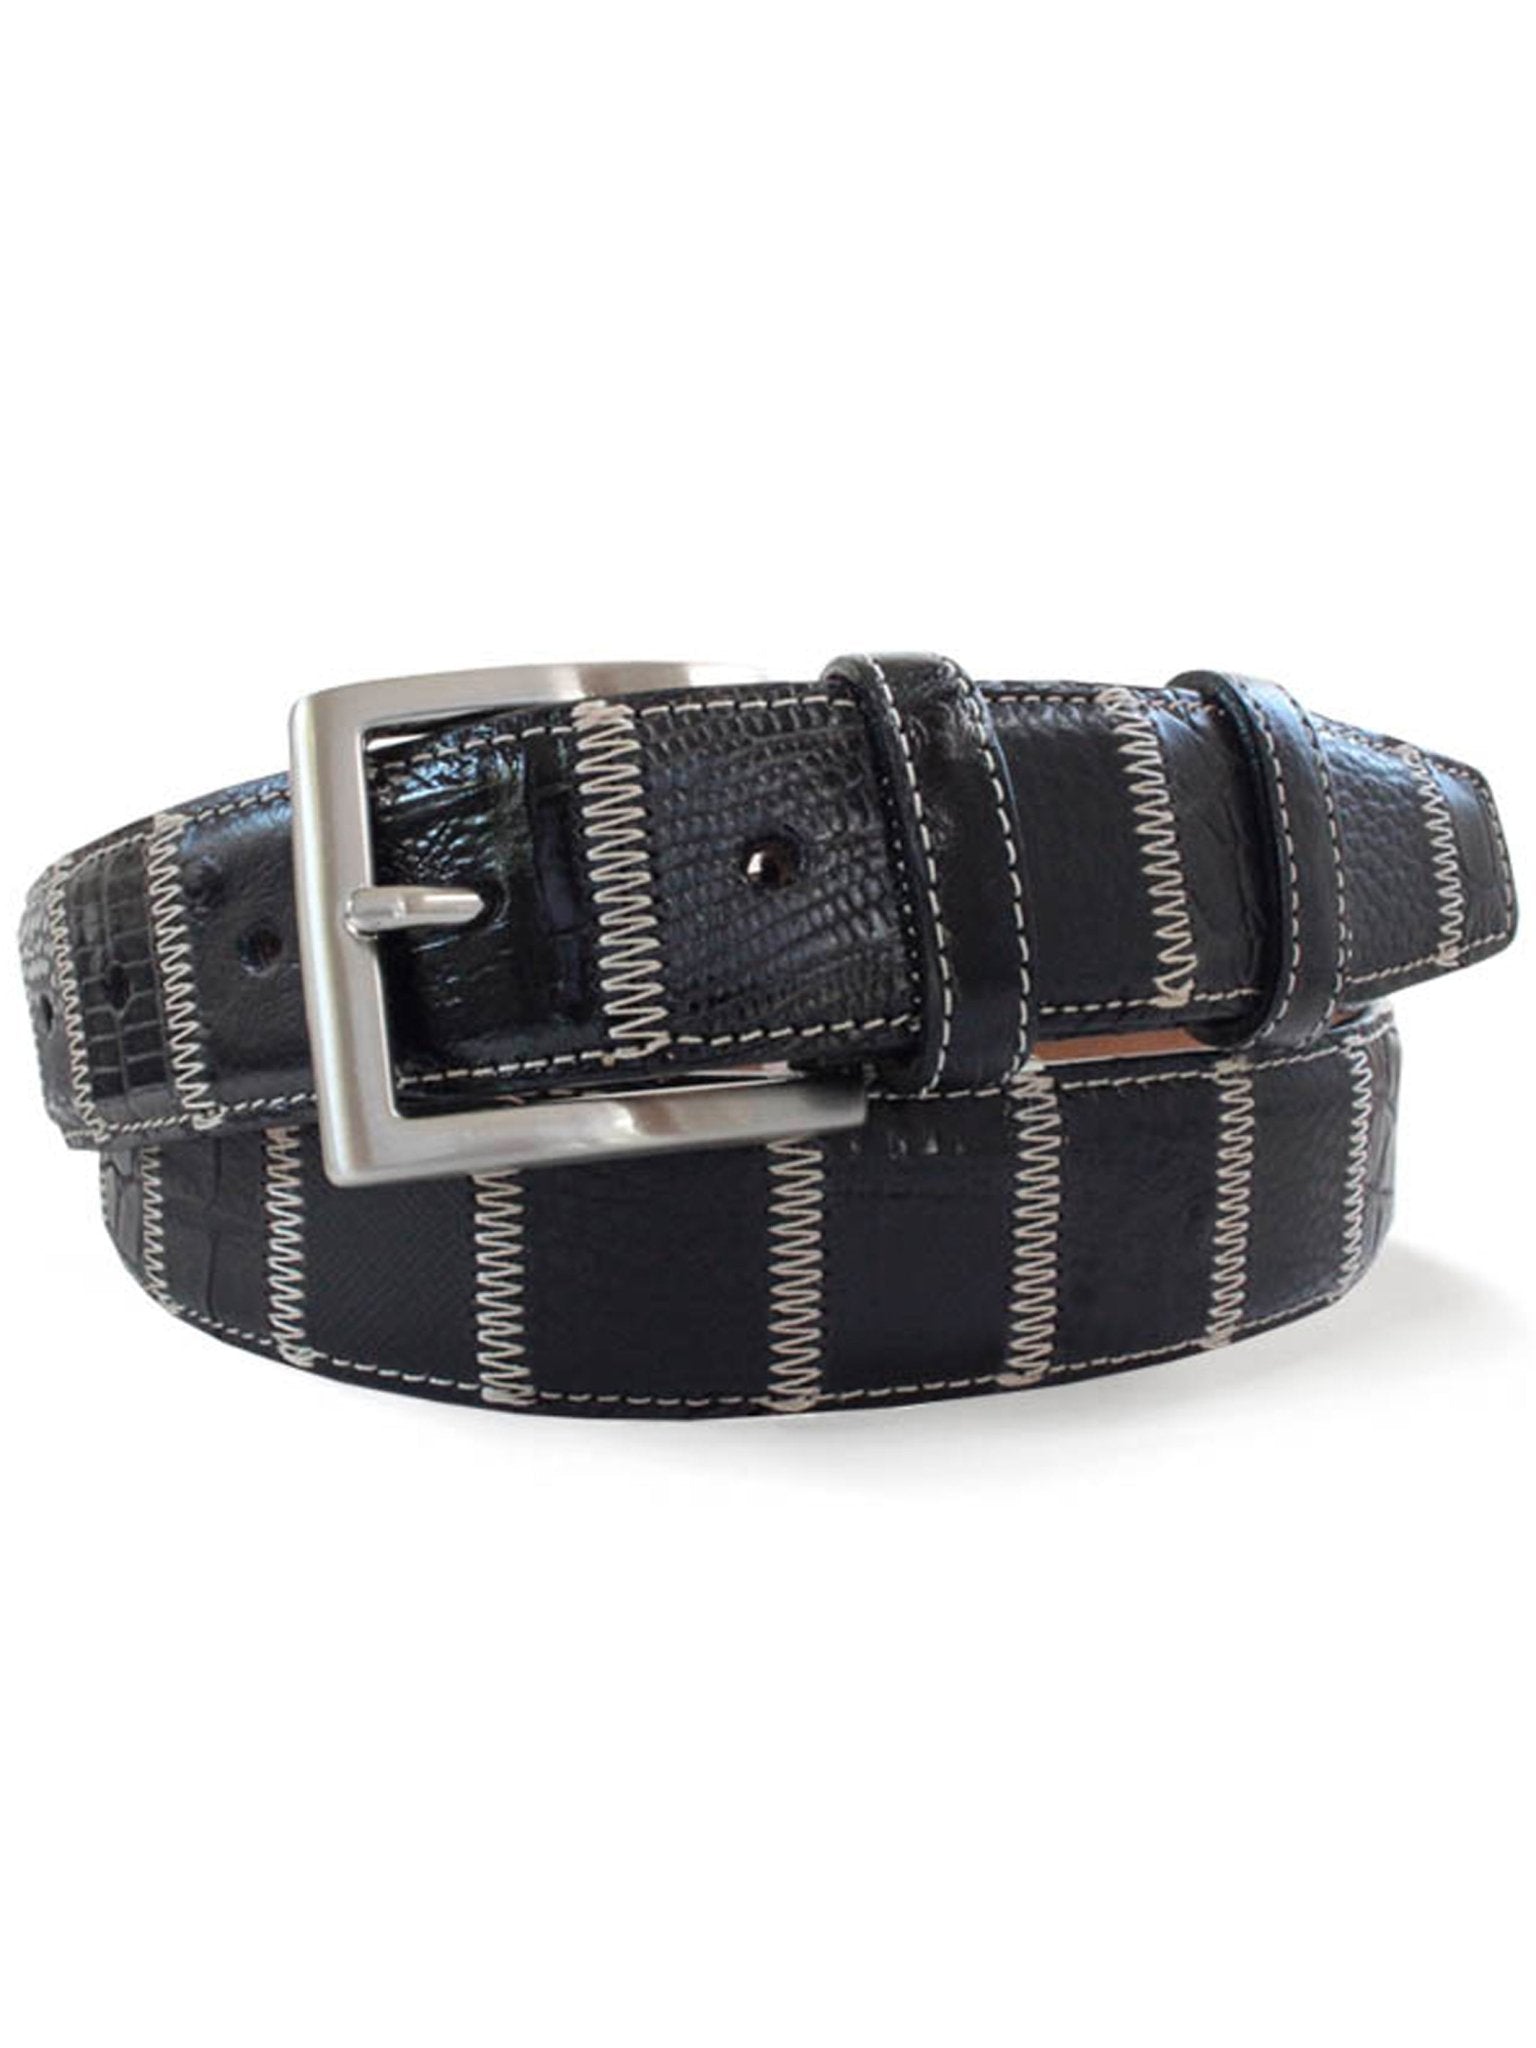 4elementsclothingRobert CharlesRobert Charles Belts - Patchwork Black Mens Belt 40mm - Made in Italy - 100% LeatherBelts1610/40/S